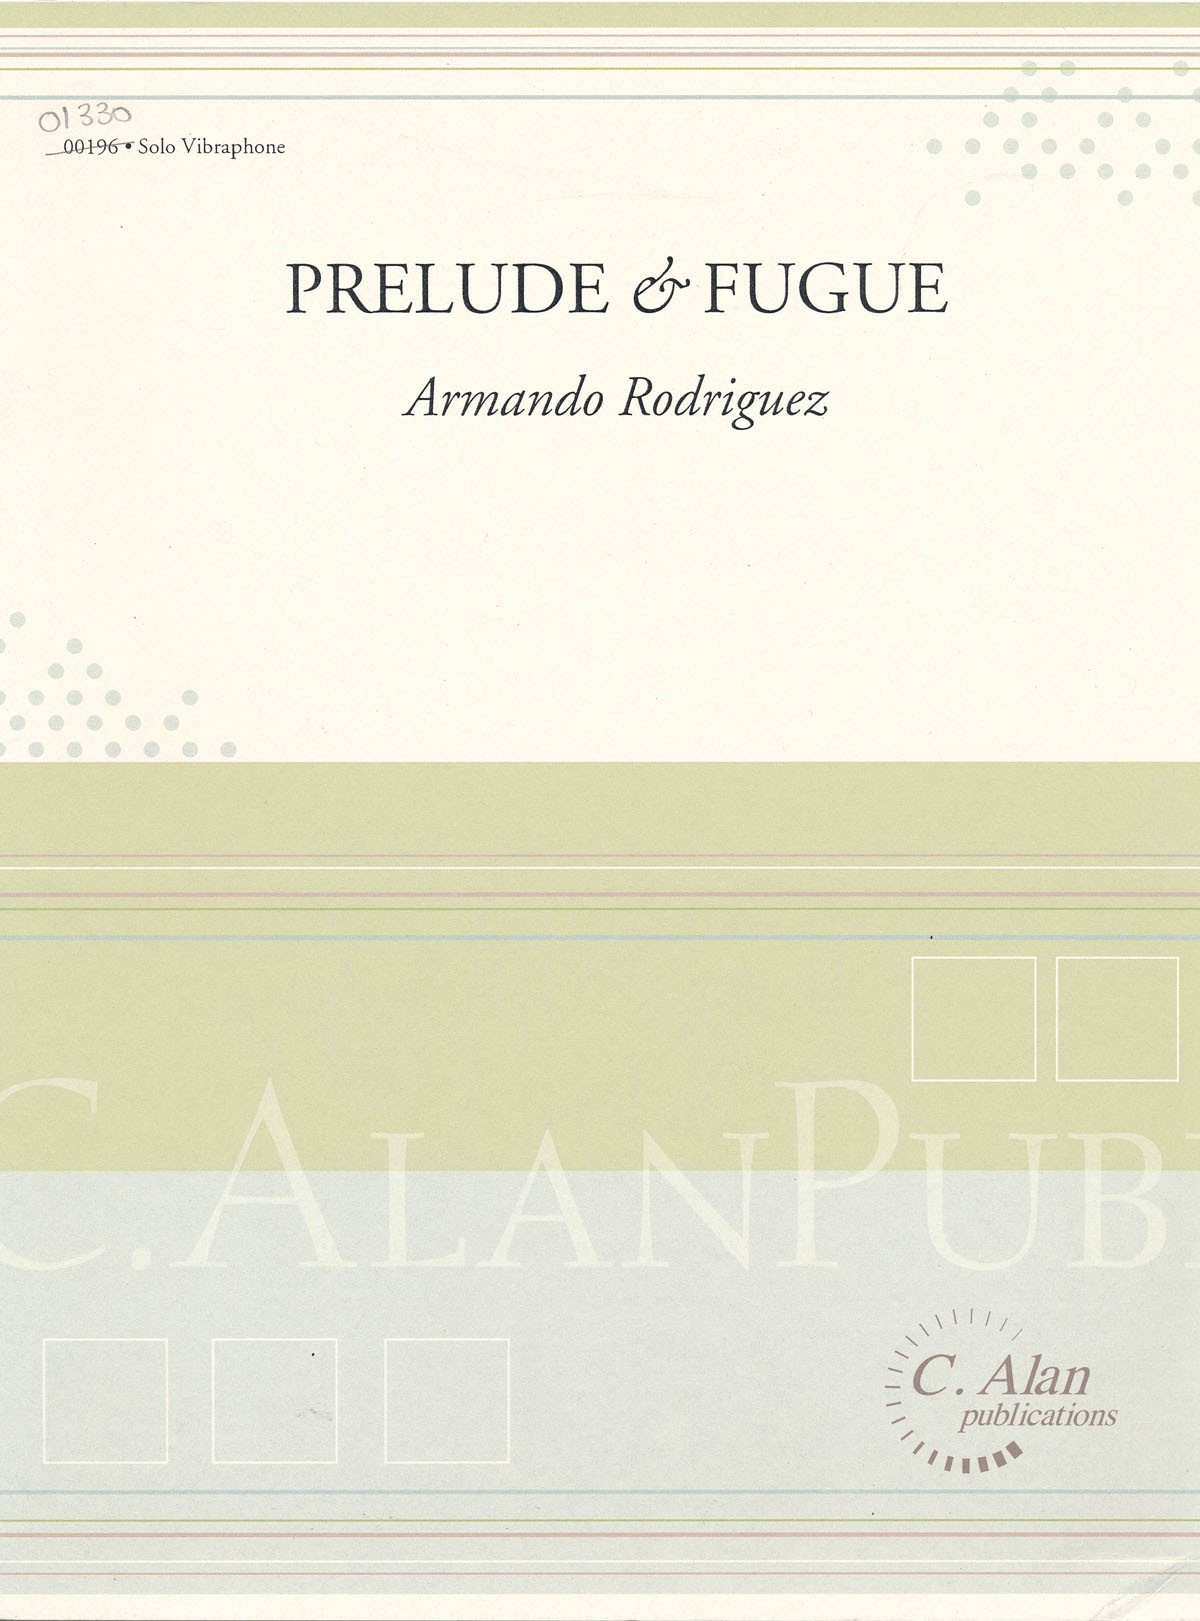 Prelude and Fugue by Armando Rodriquez